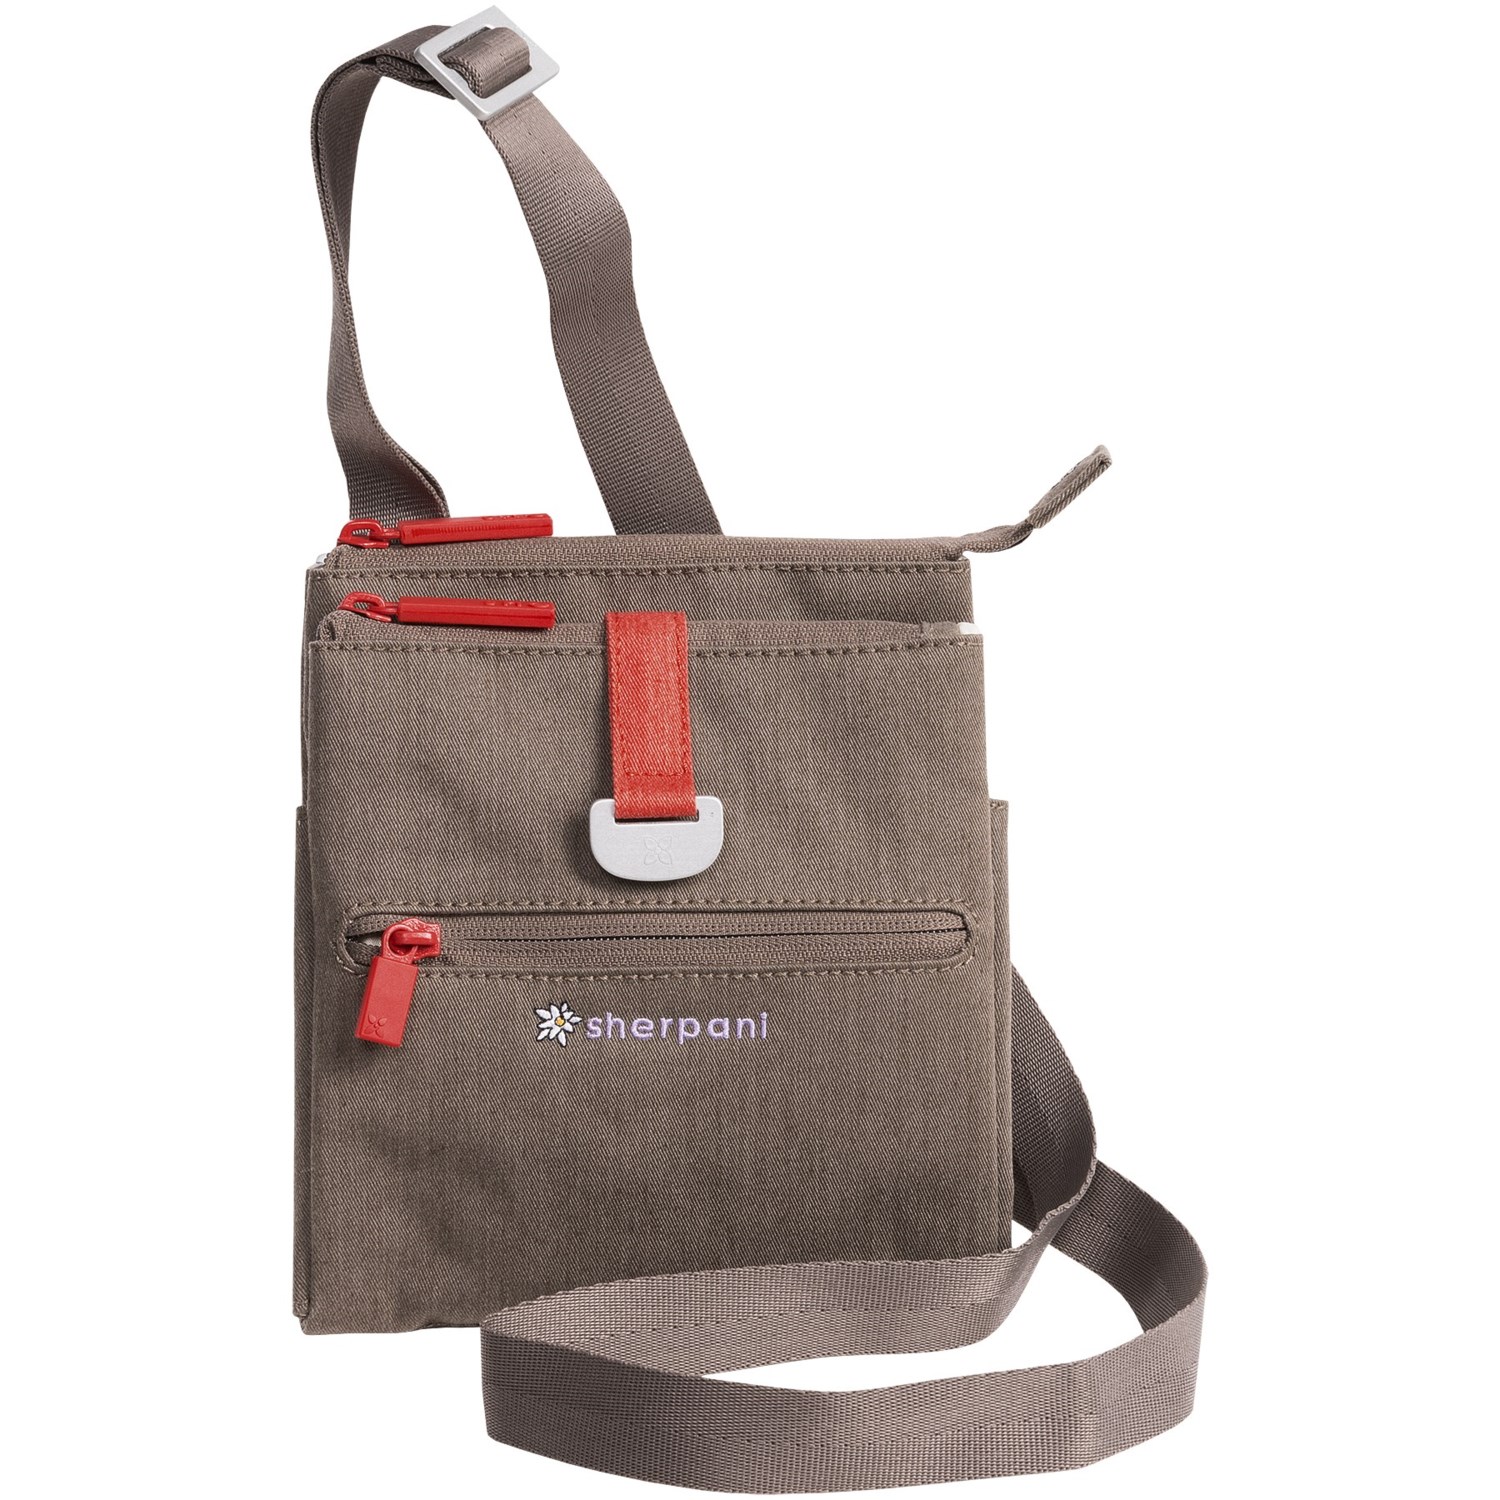 Designer Inspired Coach Handbags: Sherpani Handbags